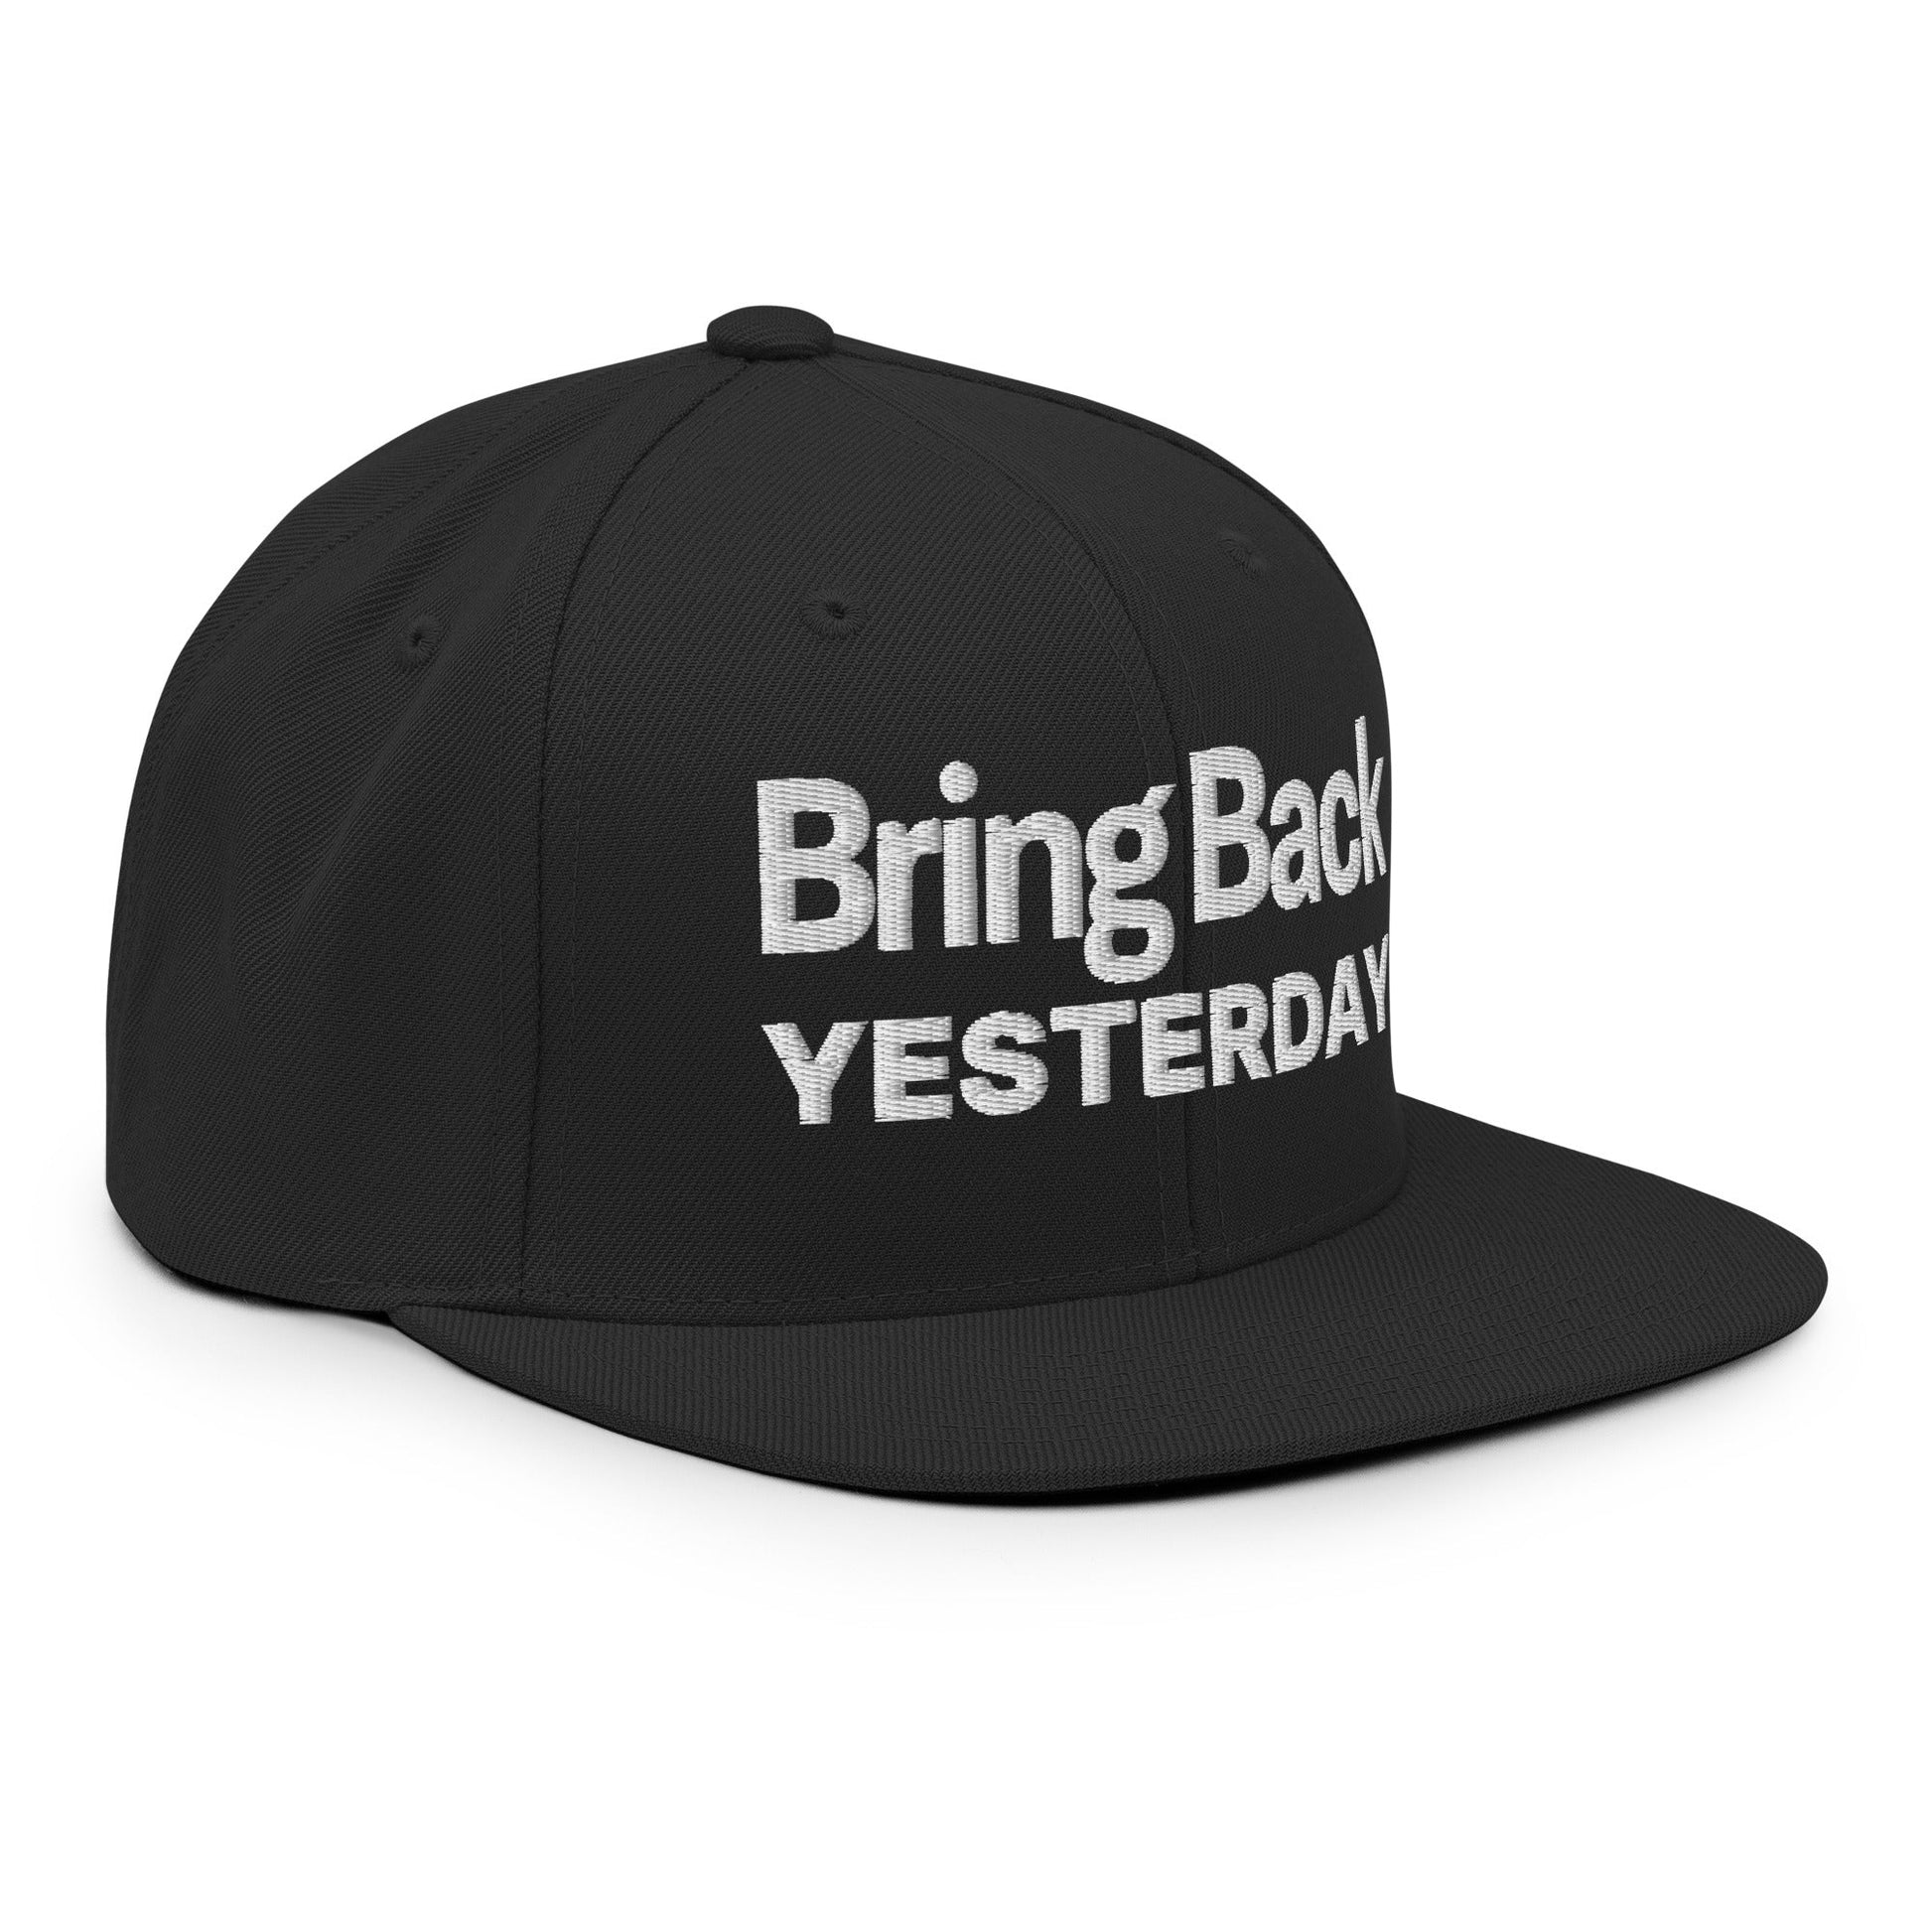 Bring Back Yesterday Flat Bill Brim Snapback Hat Black